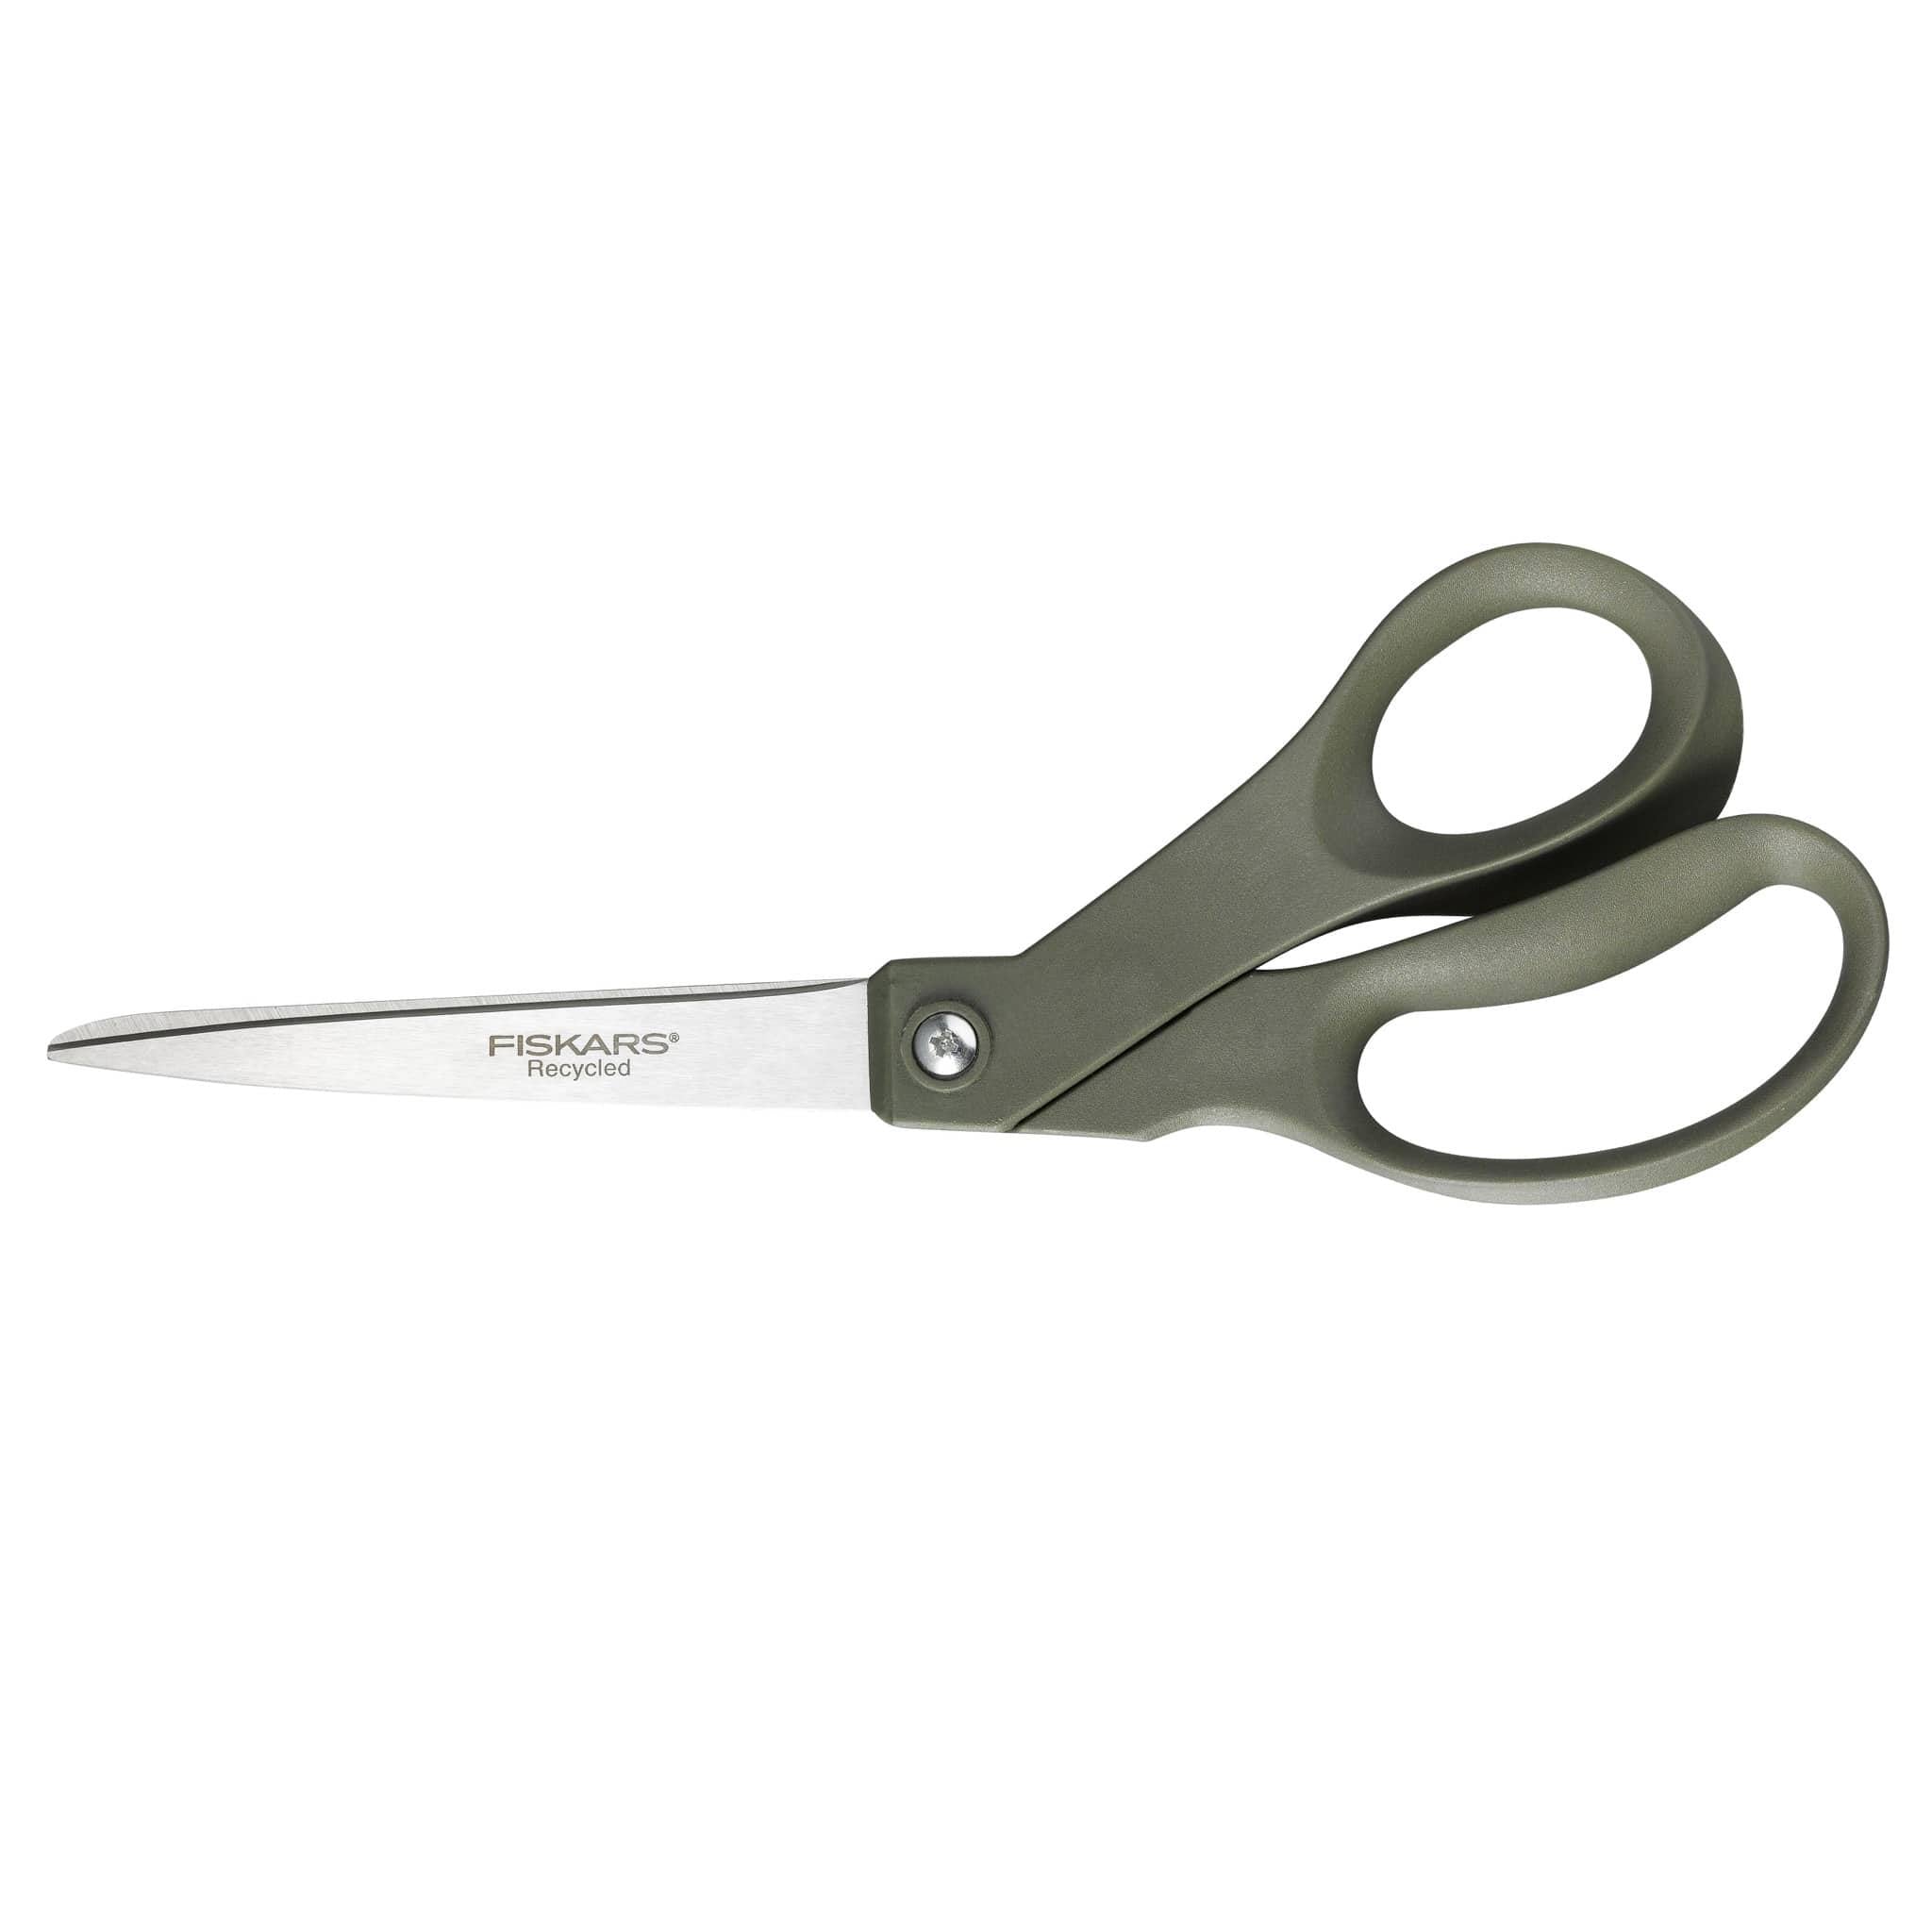 Fiskars Recycled Universal Purpose Scissors (21cm)